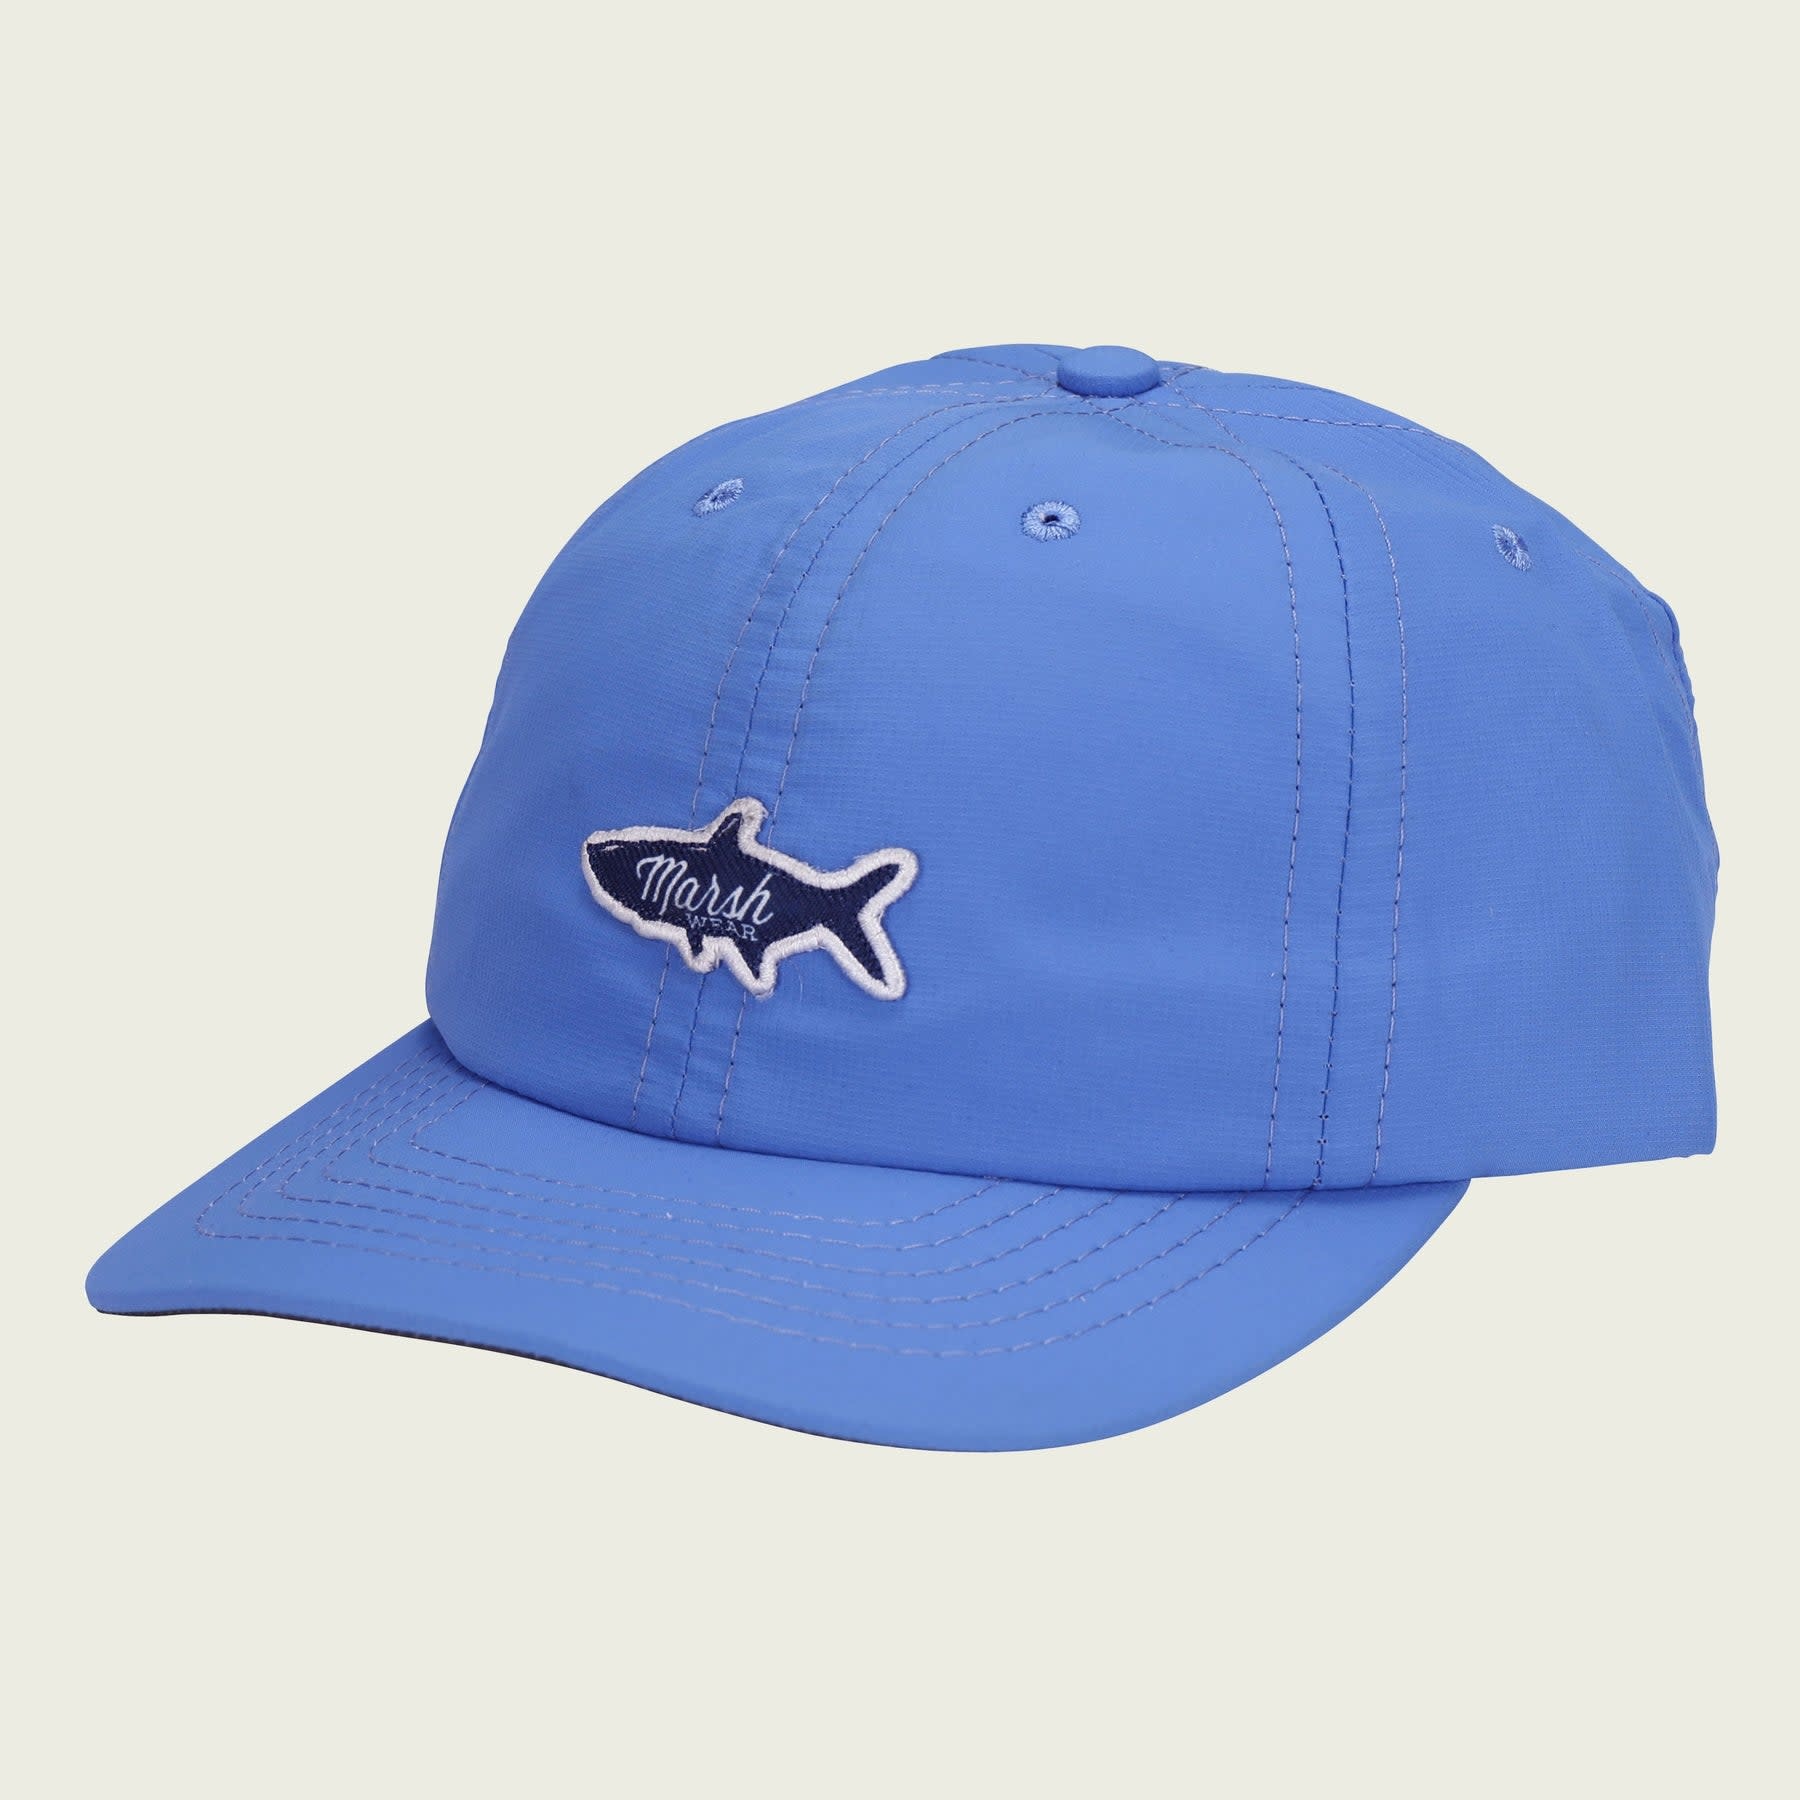 Marsh Wear Performance Hat - Blue - Florida Watersports